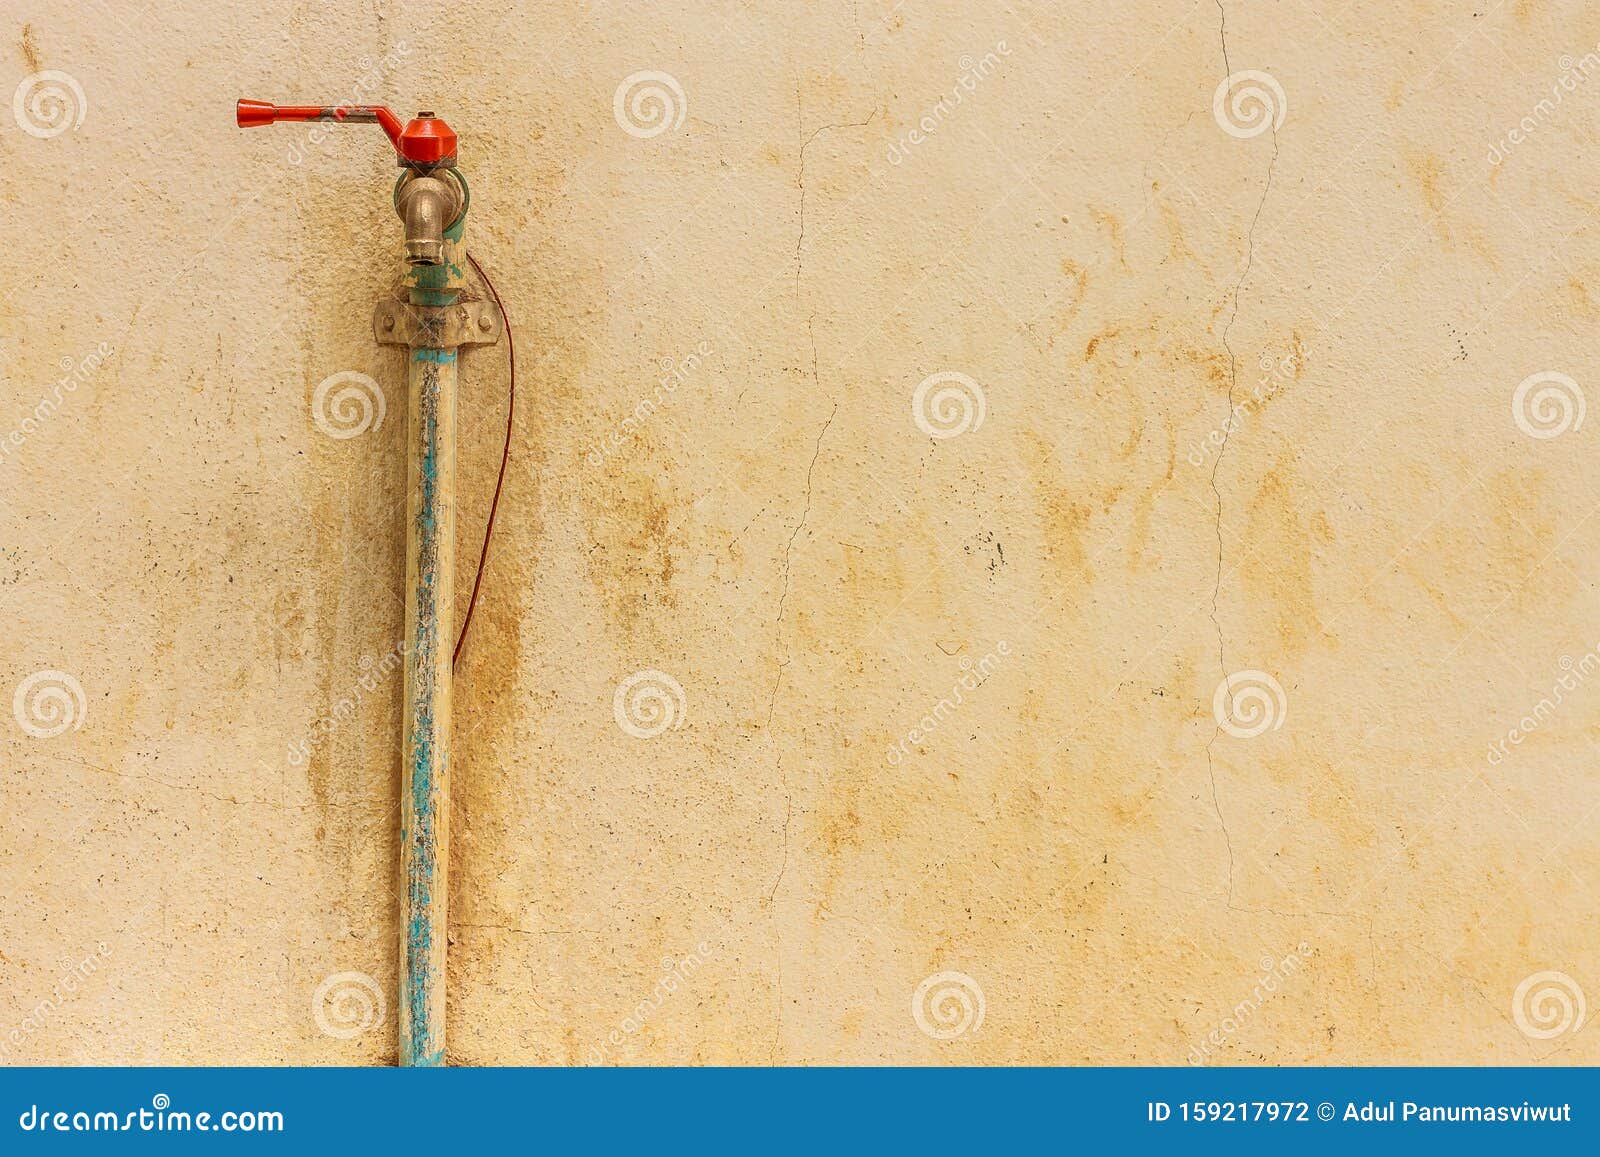 old faucet rusty water tap vintage.llave de agua abierta. canilla de agua